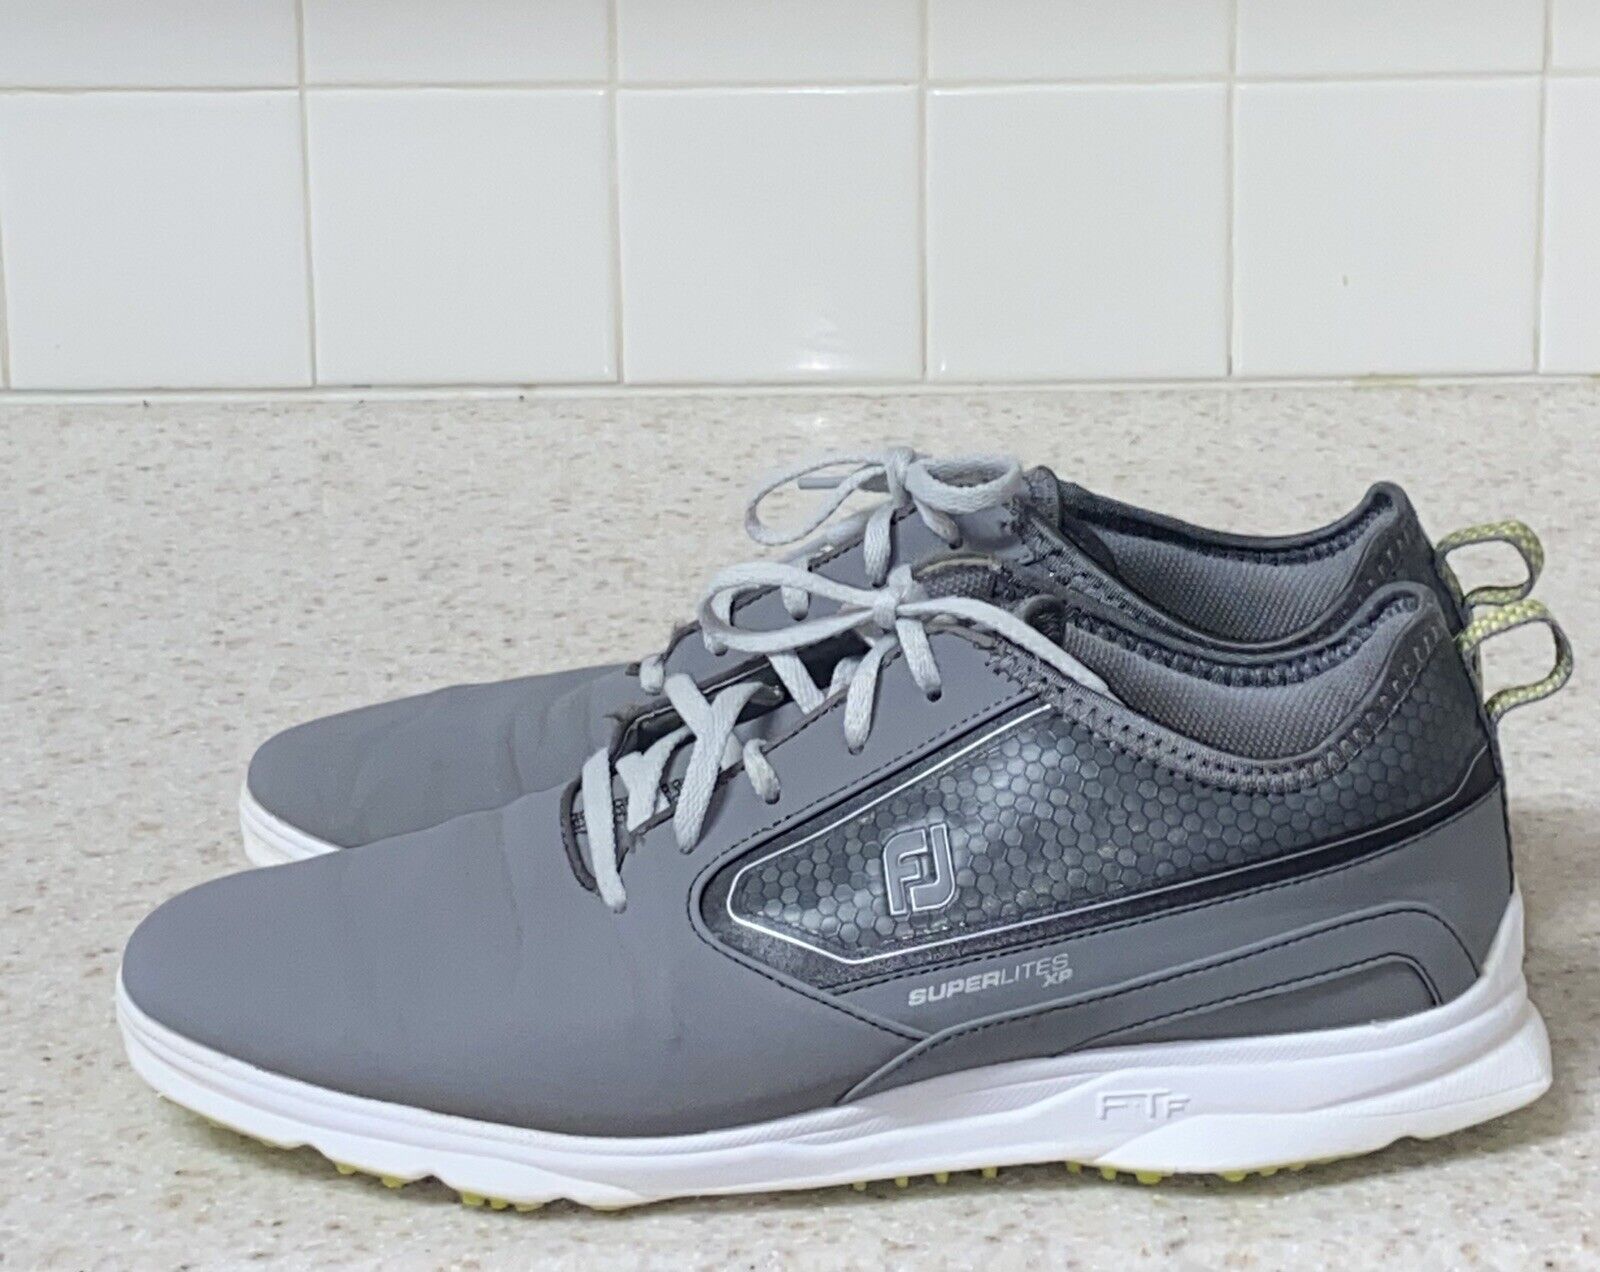 FootJoy Superlites XP Golf Shoes, 58086, Gray, Mens Size 10.5 M